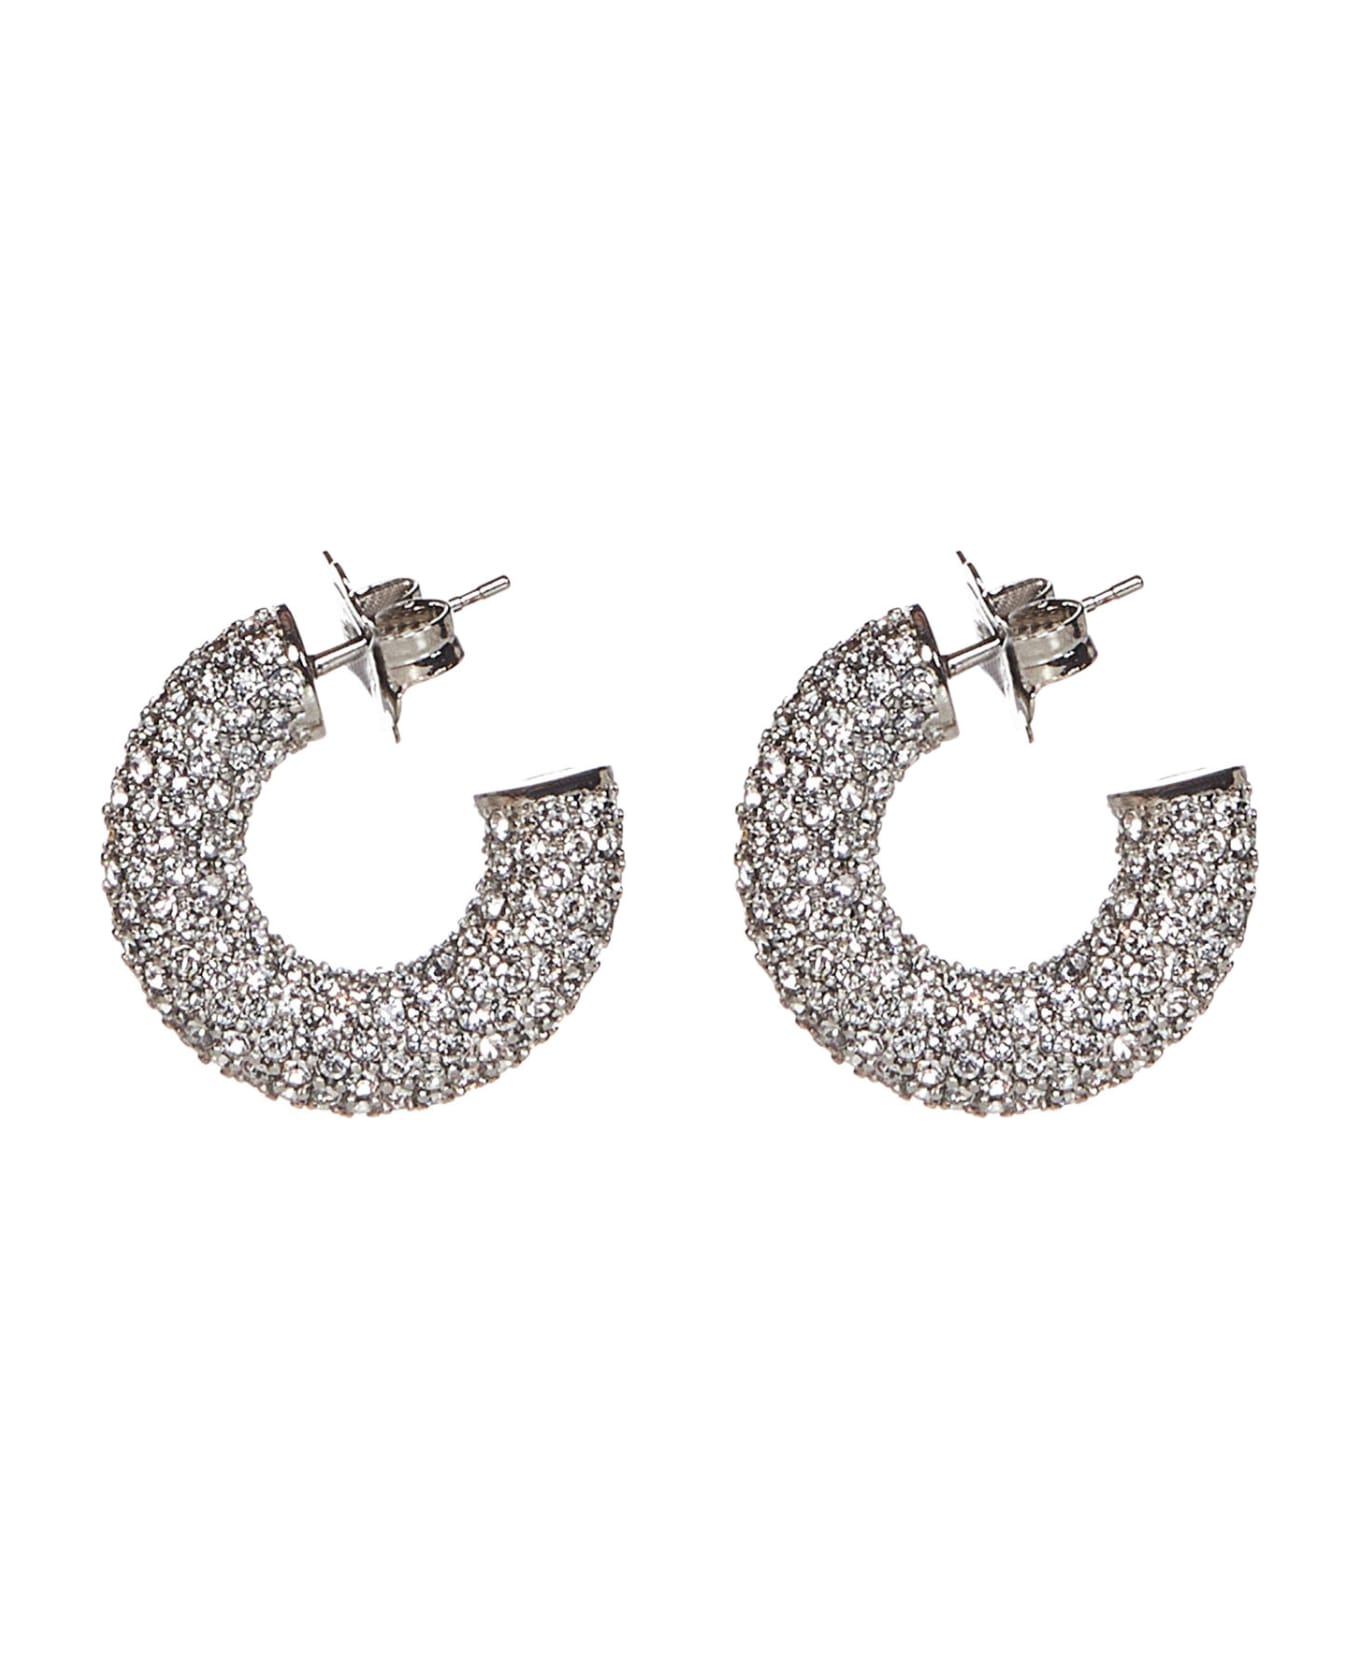 Amina Muaddi 'cameron Small' Earrings - Silver